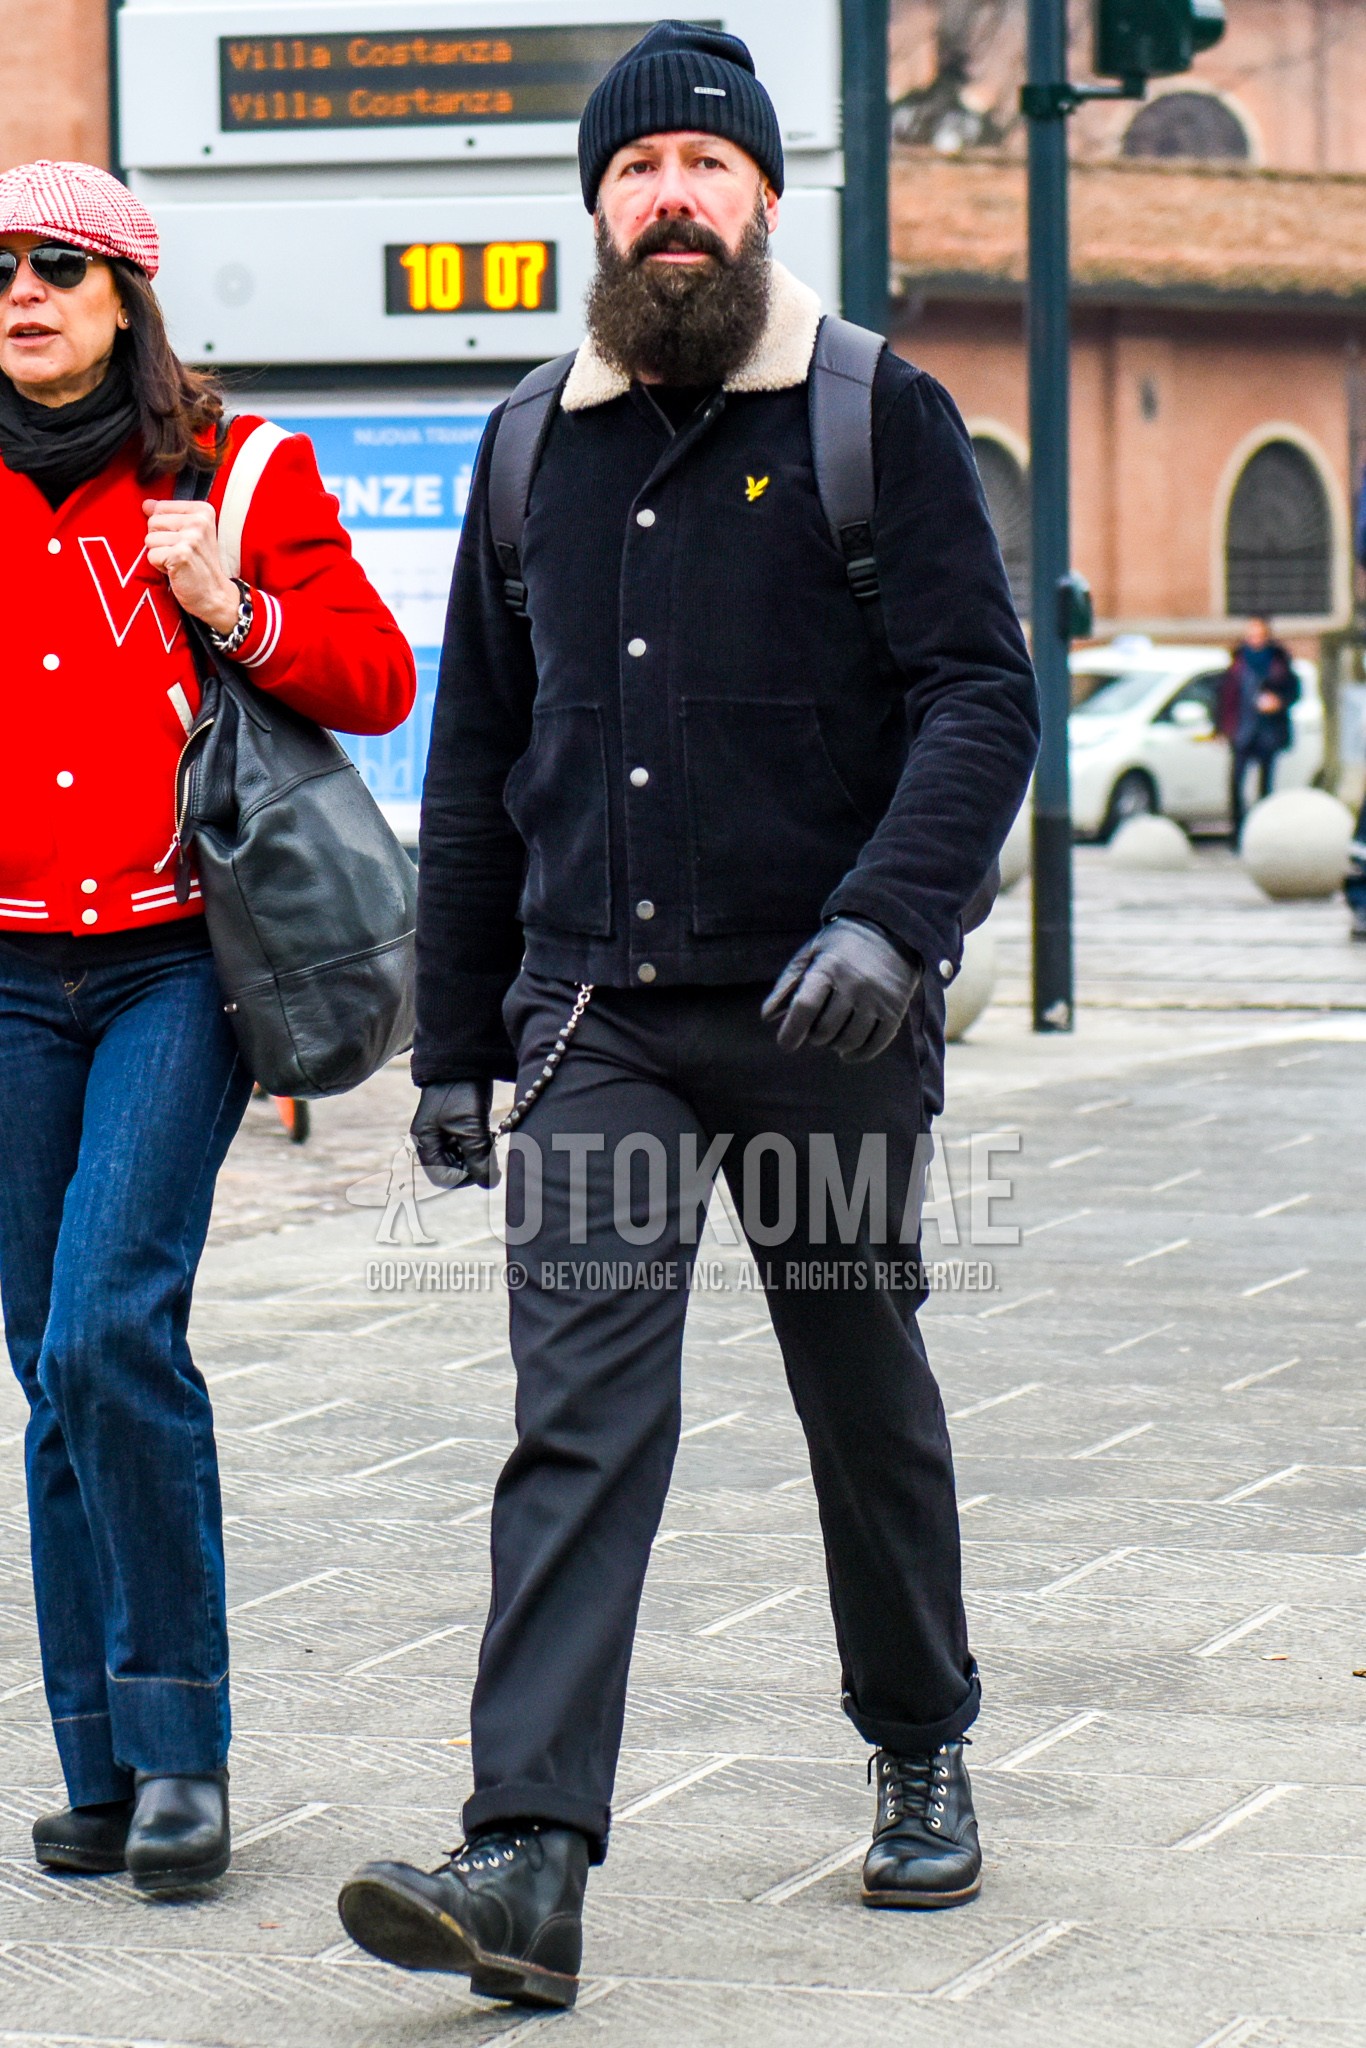 Men's winter outfit with black plain knit cap, black plain outerwear, black plain slacks, black work boots.